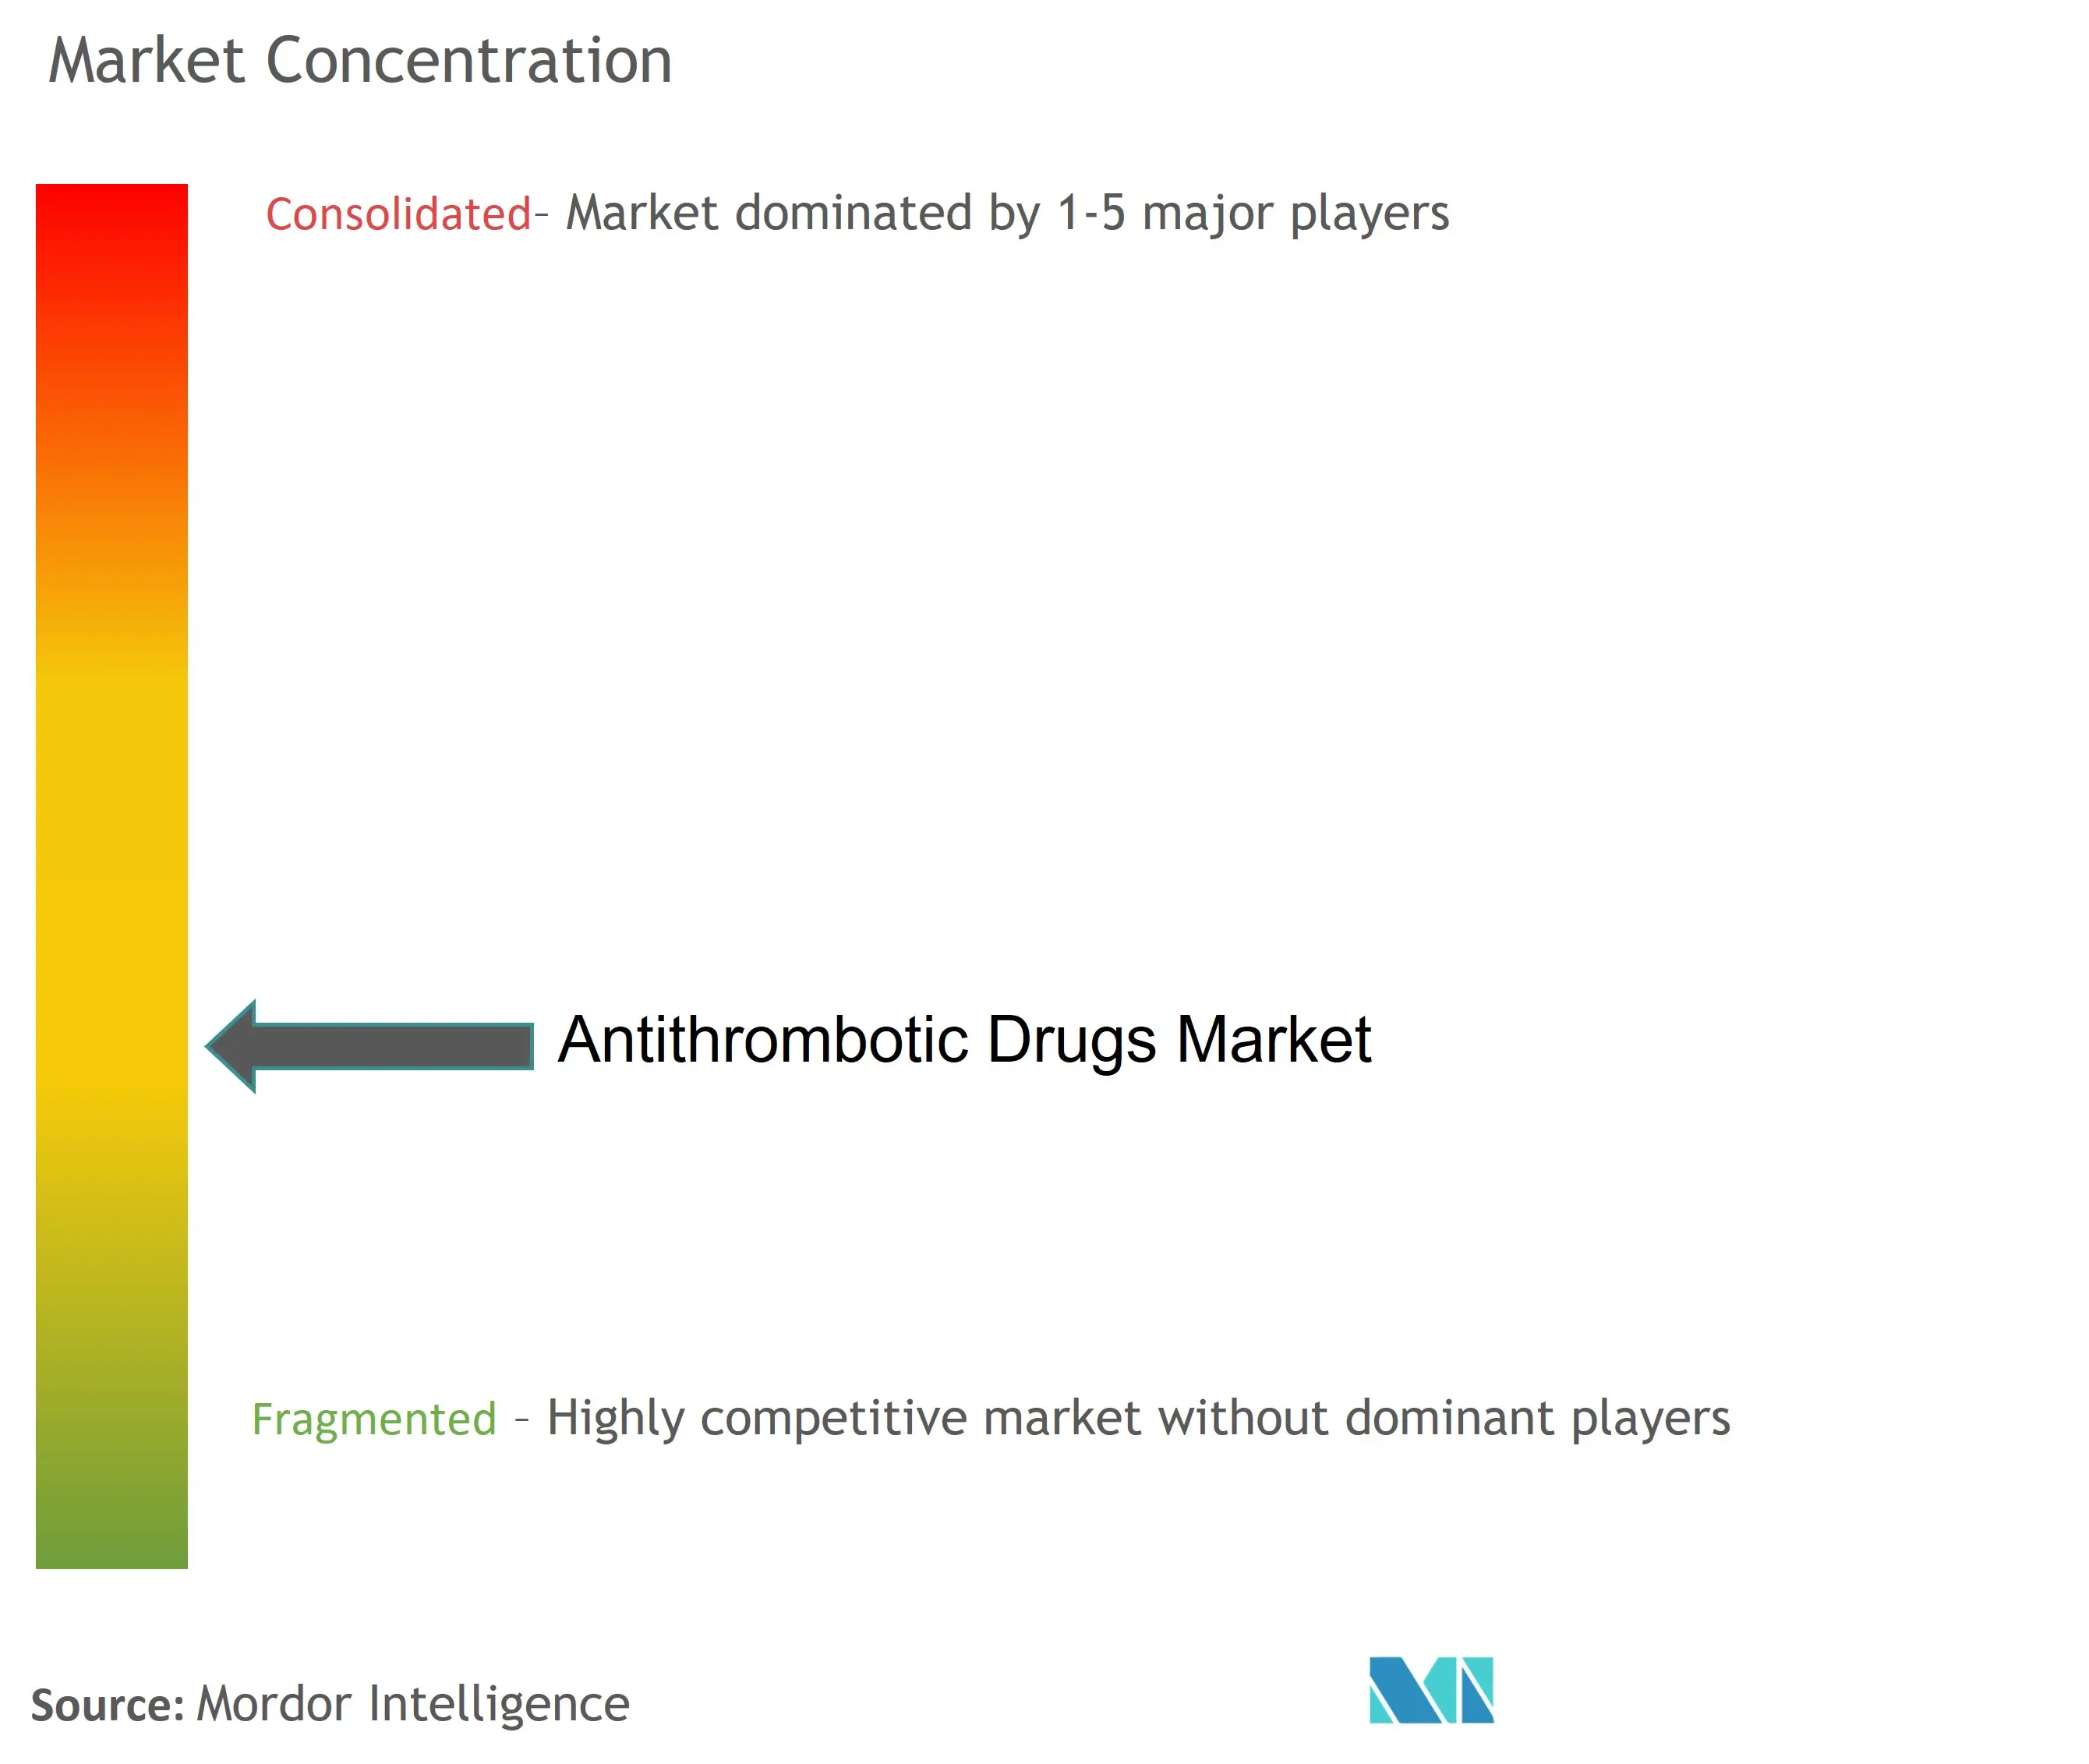 Antithrombotic Drugs Market Concentration